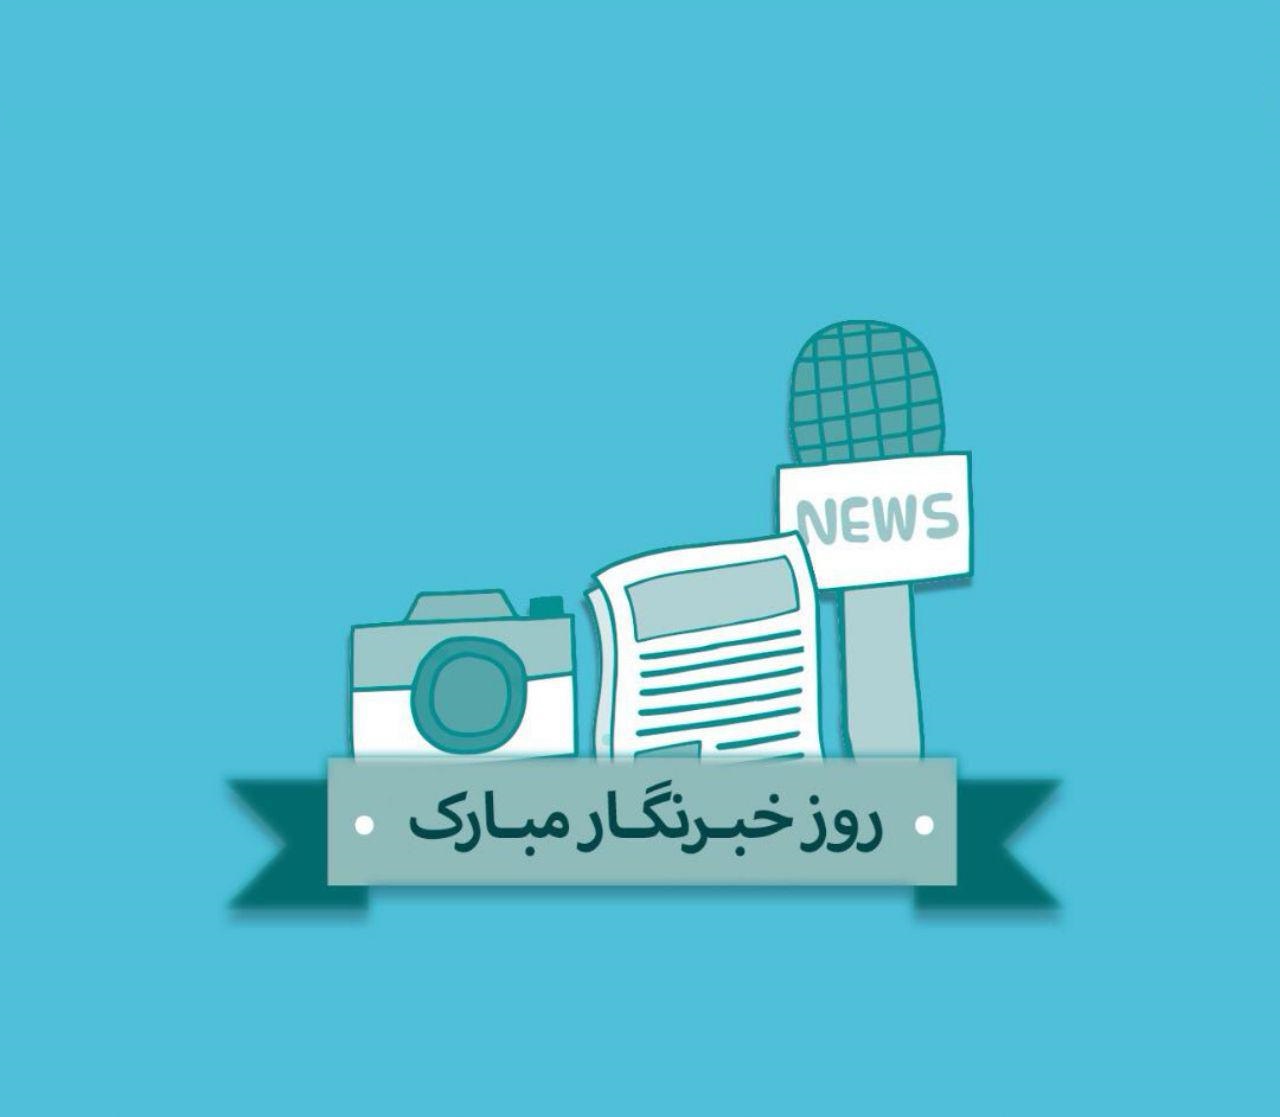 پاسداشت روز خبرنگار